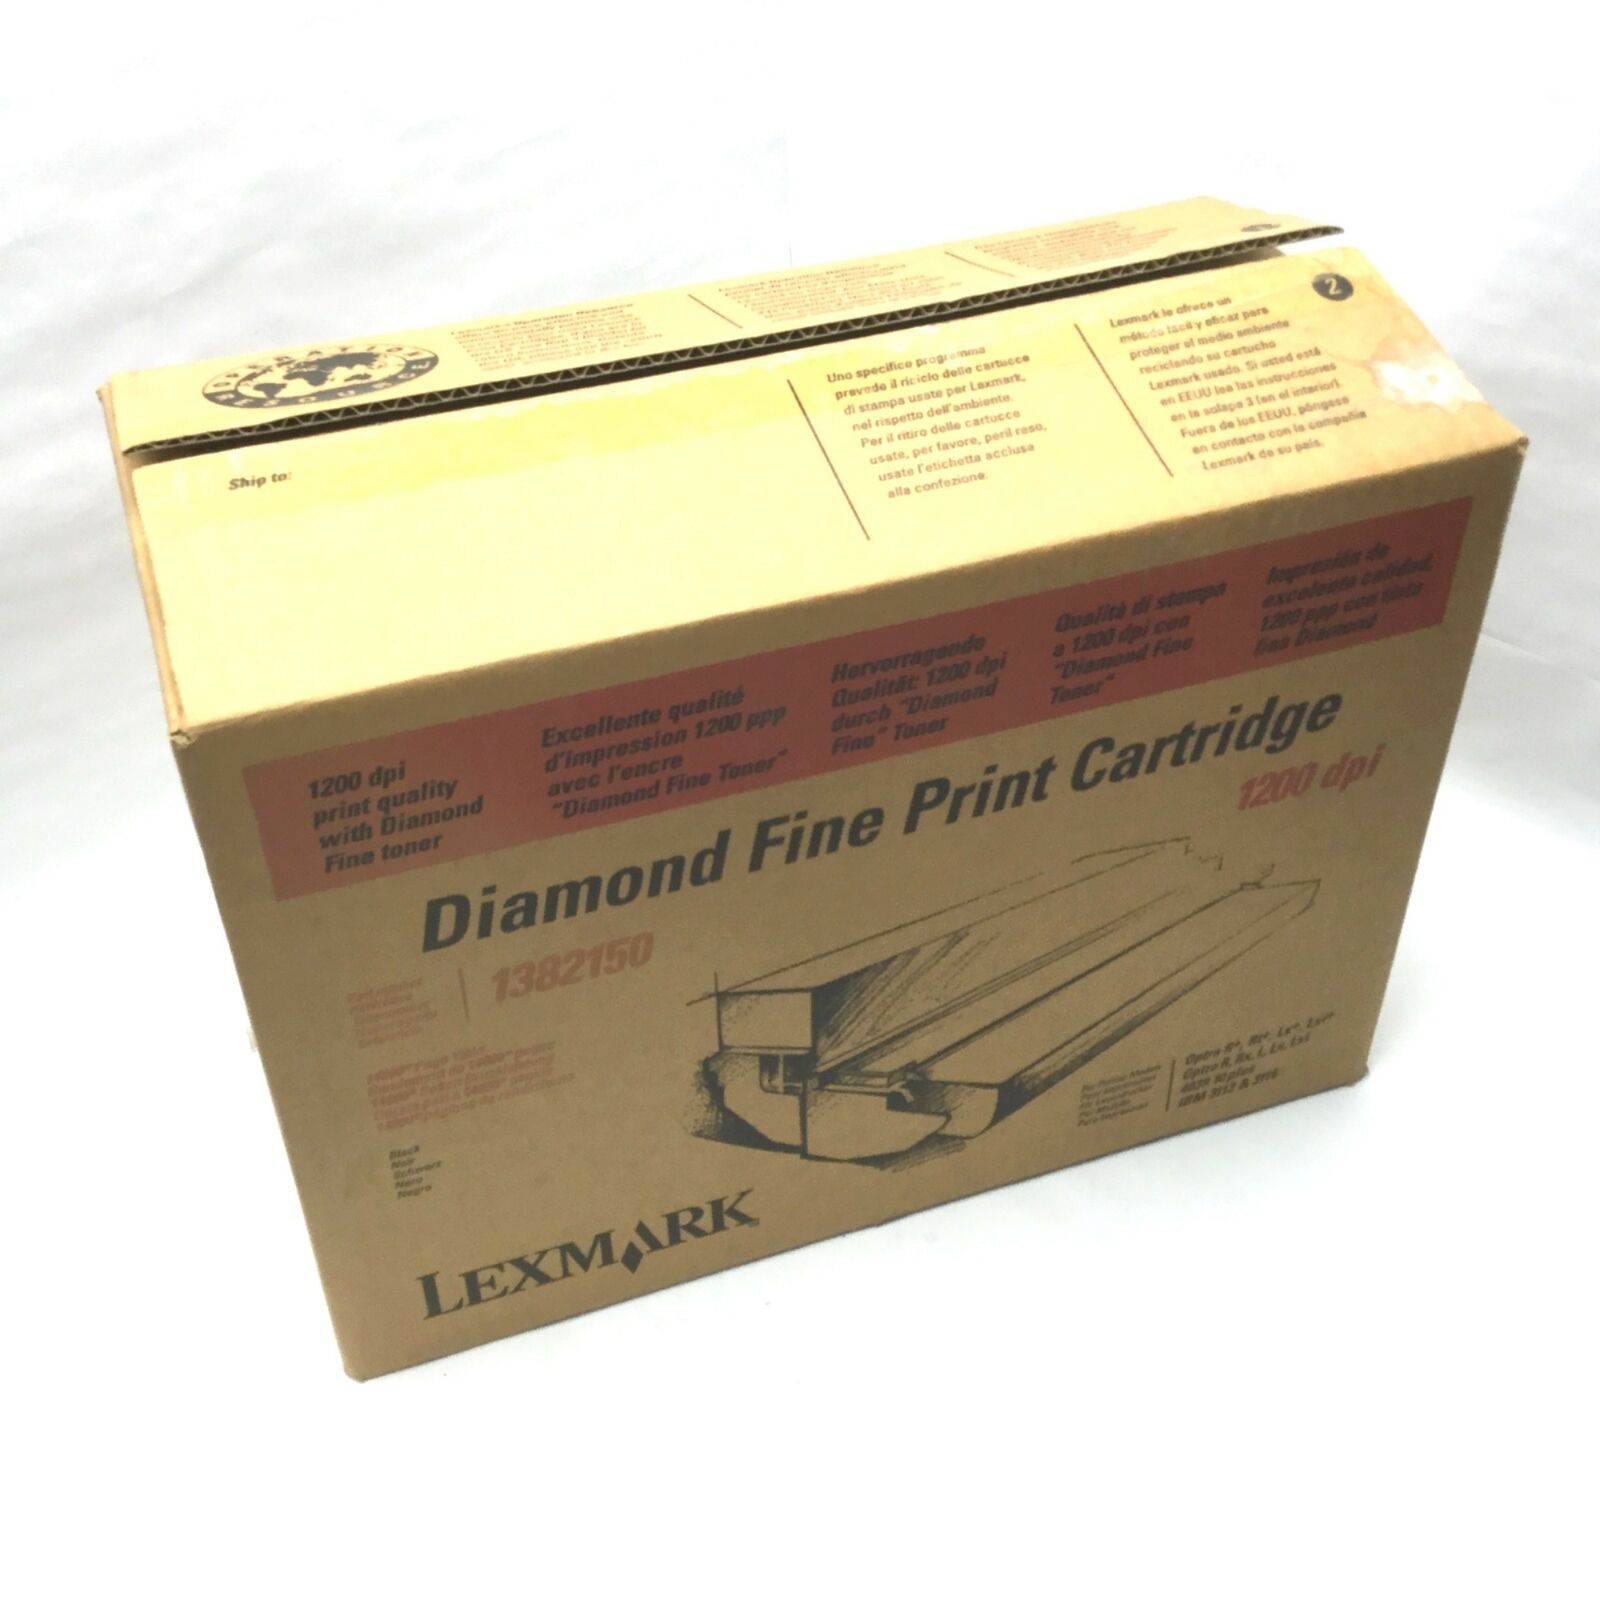 Lexmark 1382150 Diamond Fine Black Print Cartridge 14,000 Page Yield, 1,200DPI 